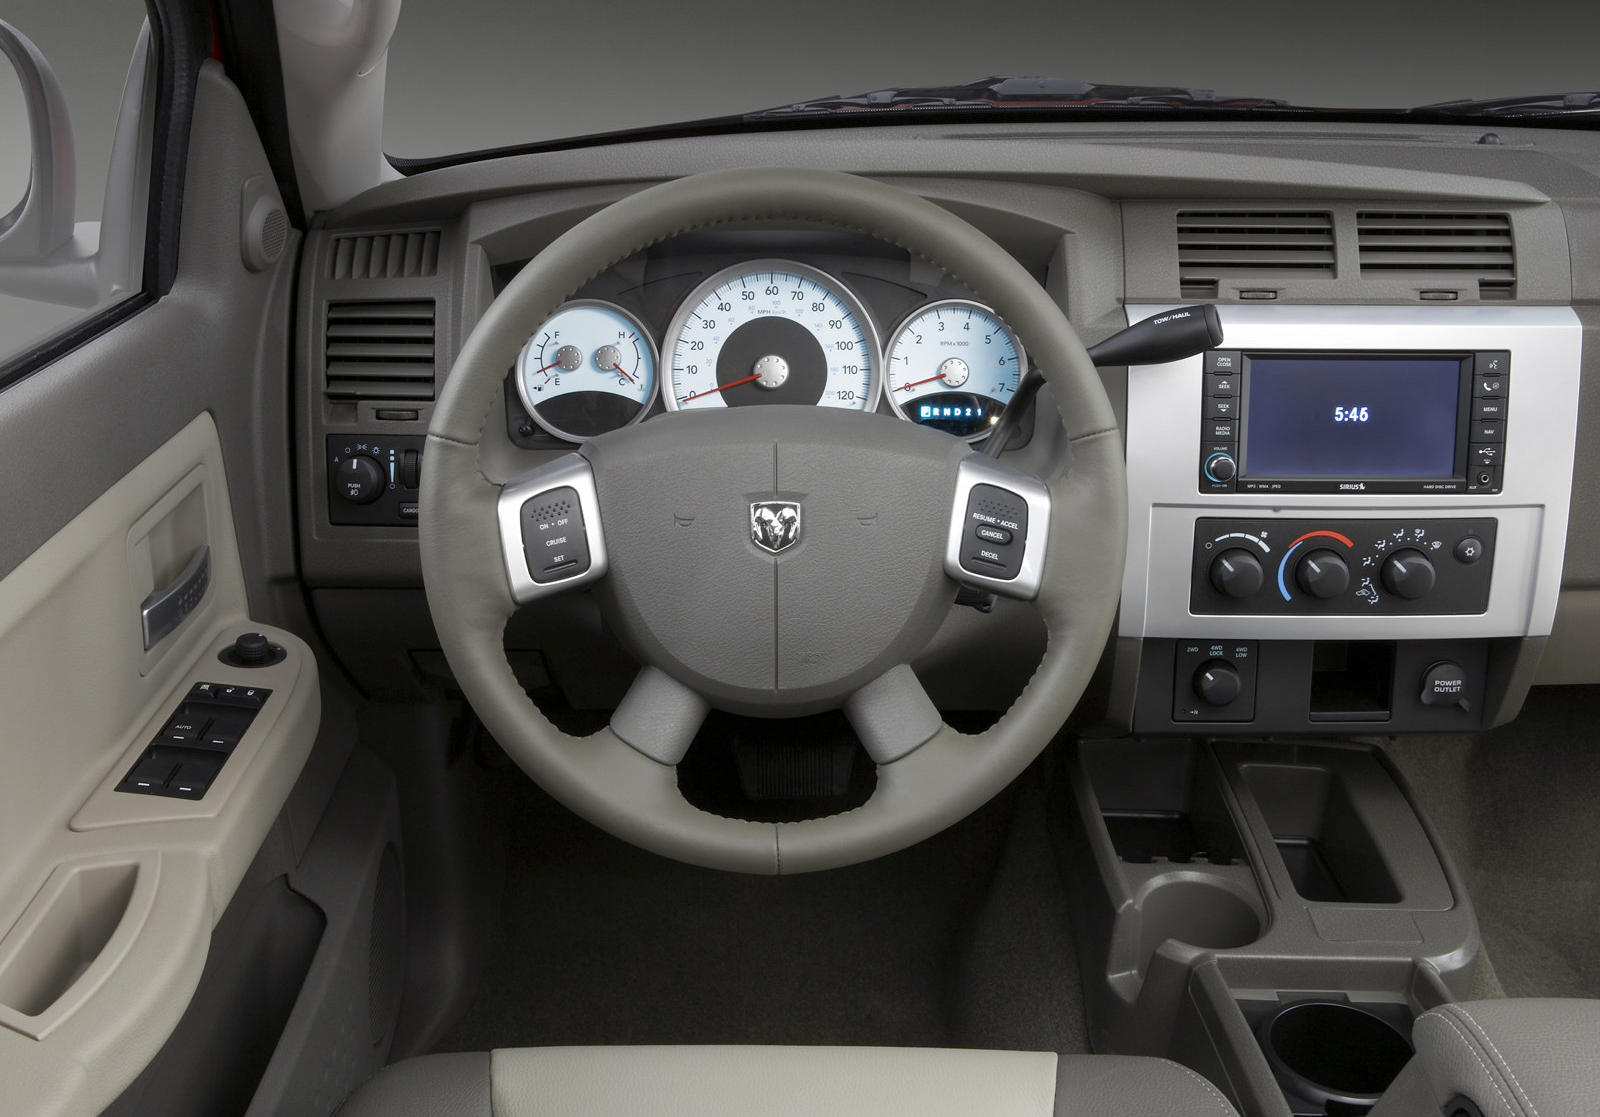 2010 Dodge Dakota Steering Wheel